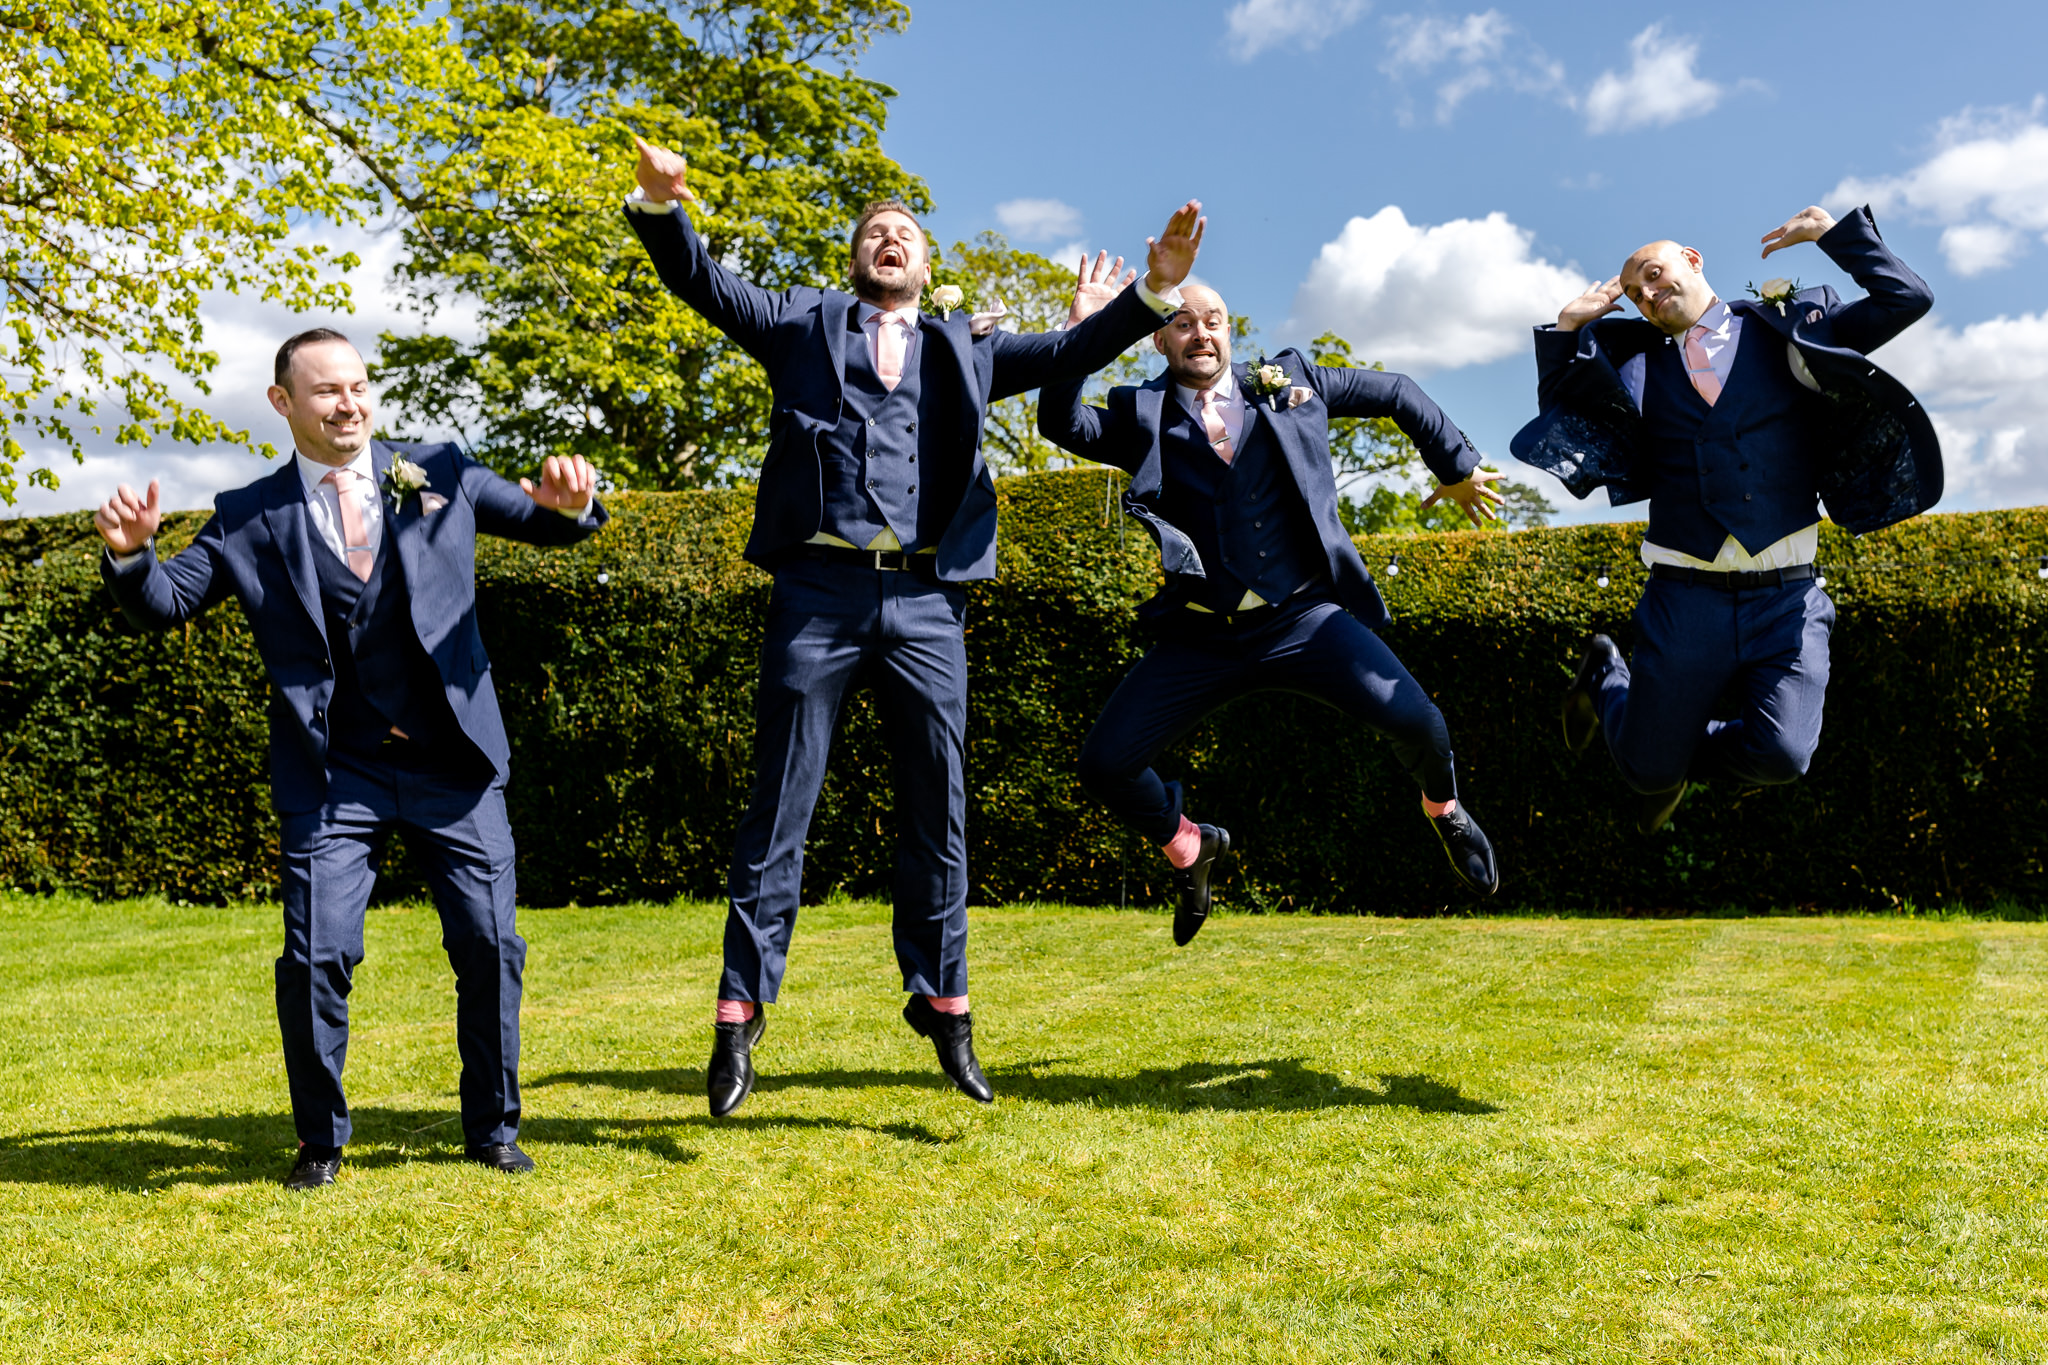 Grommsmen jumping Peterstone Court